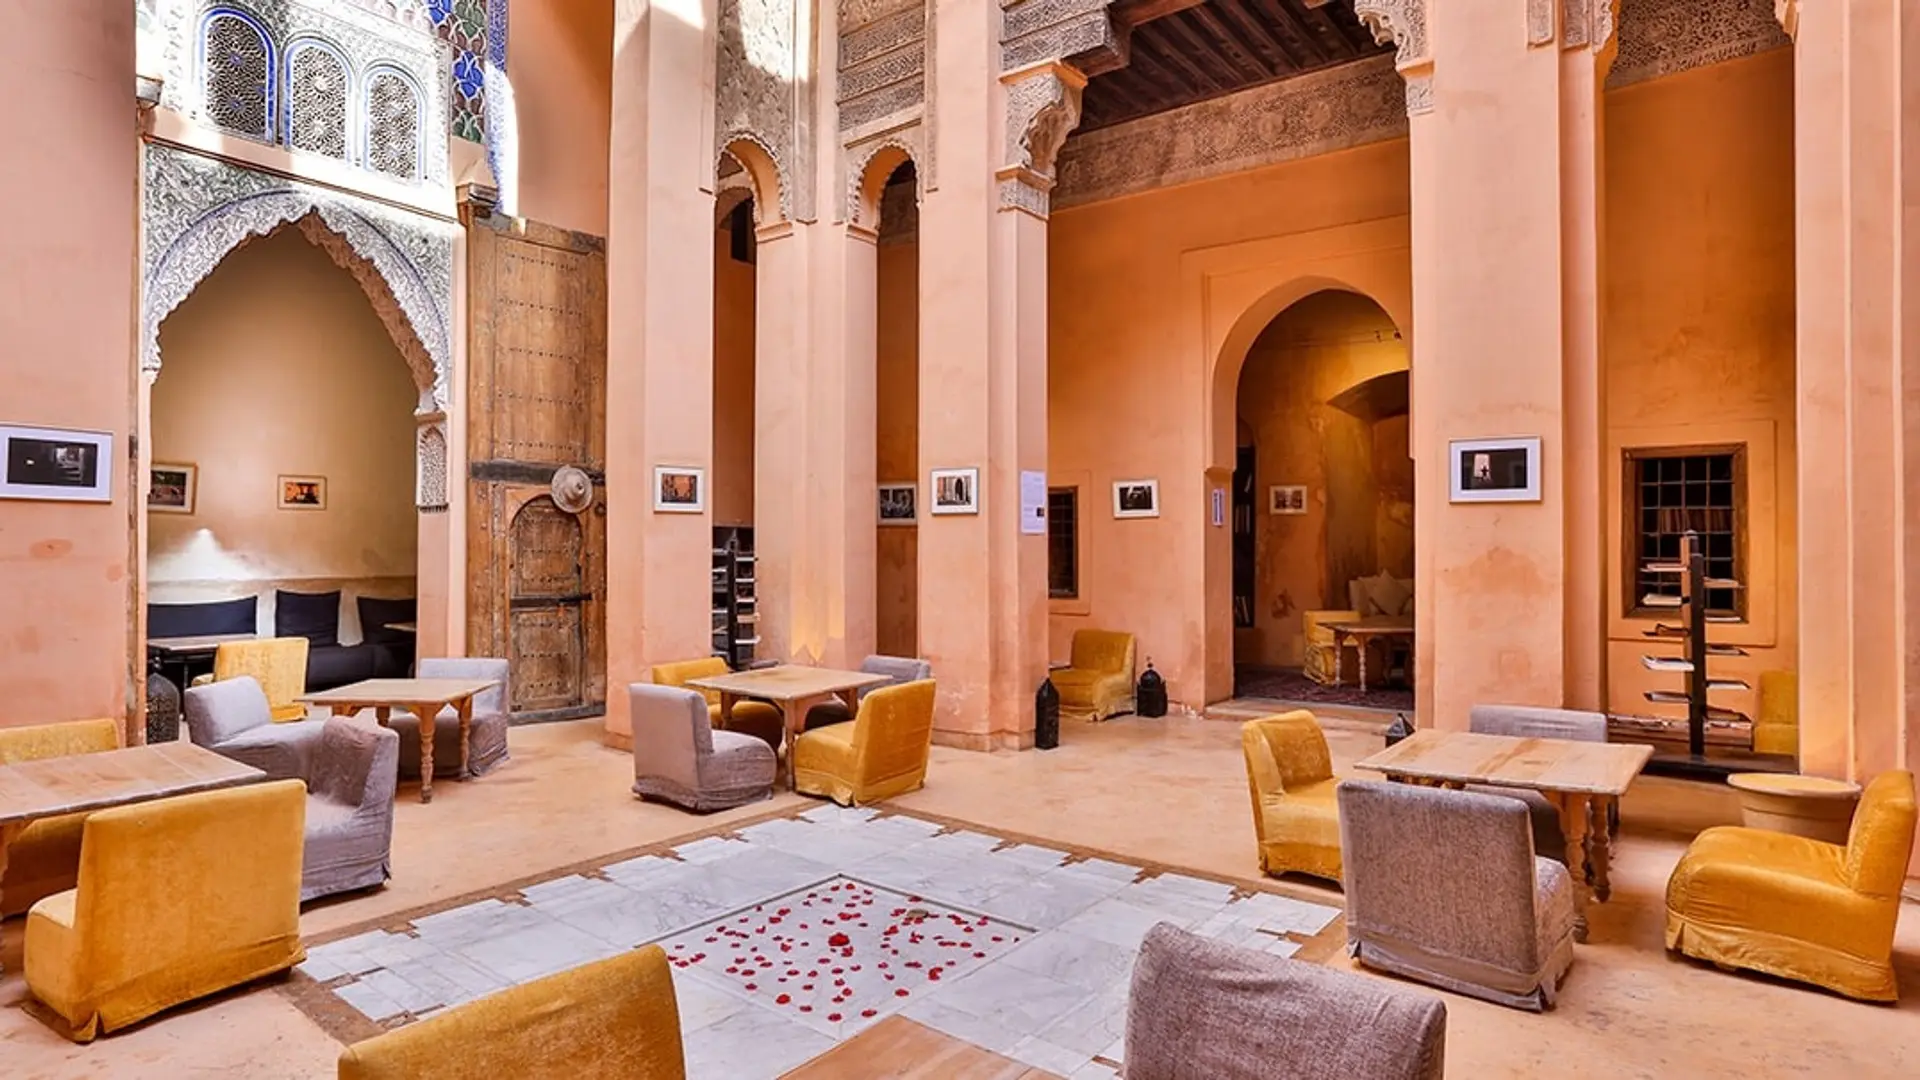 Destinations Articles - Marrakesh - Ravishing Red City of the Sahara